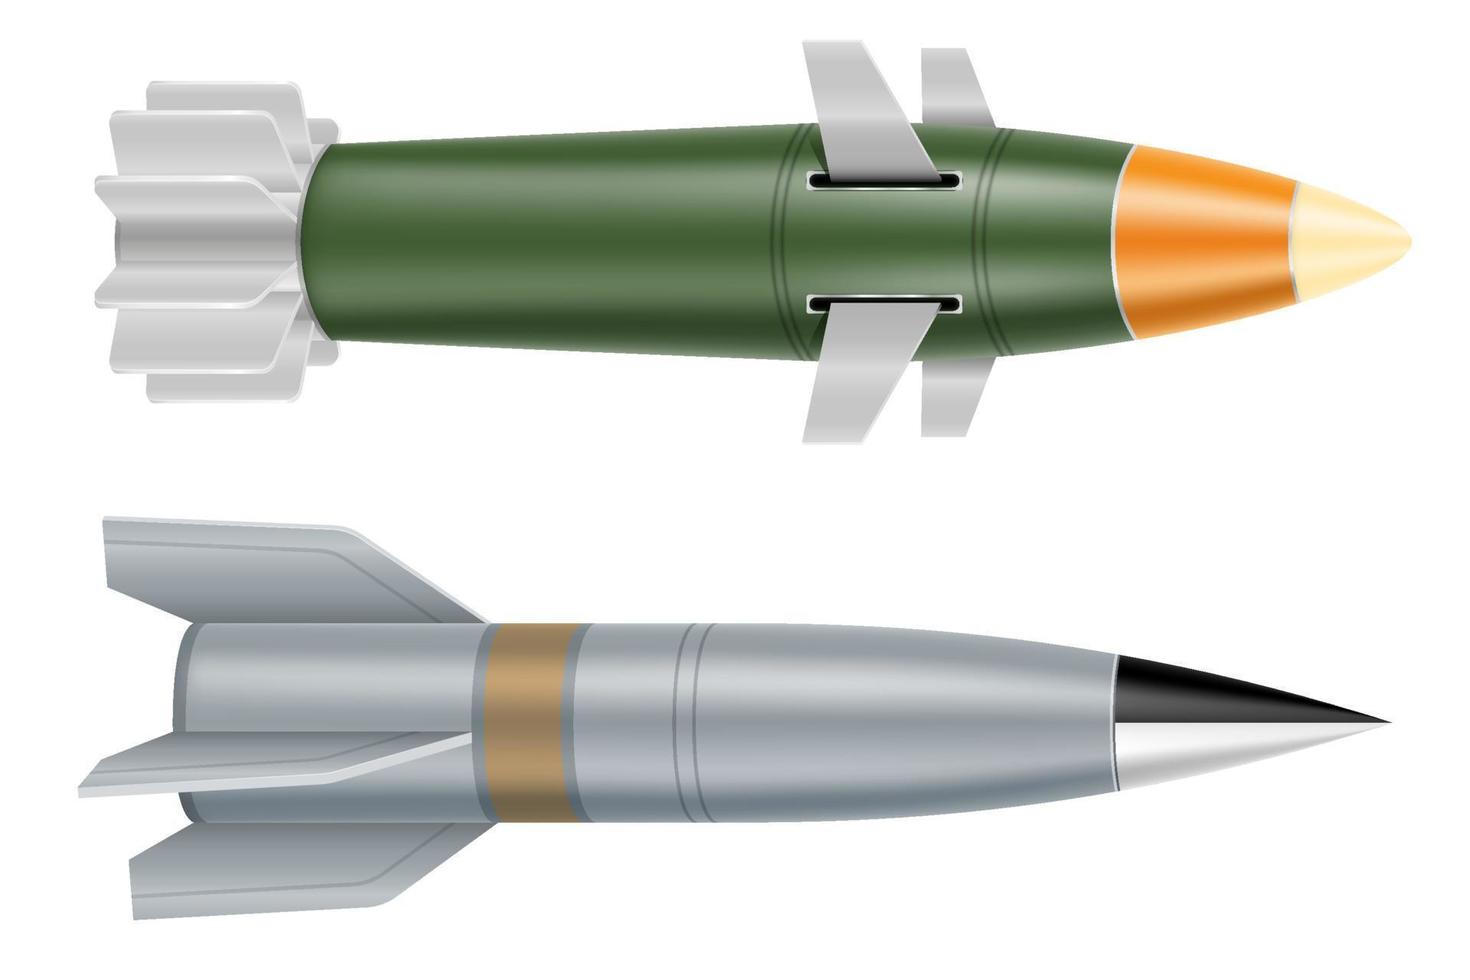 ilustración vectorial de misiles balísticos militares de largo alcance aislada en fondo blanco vector